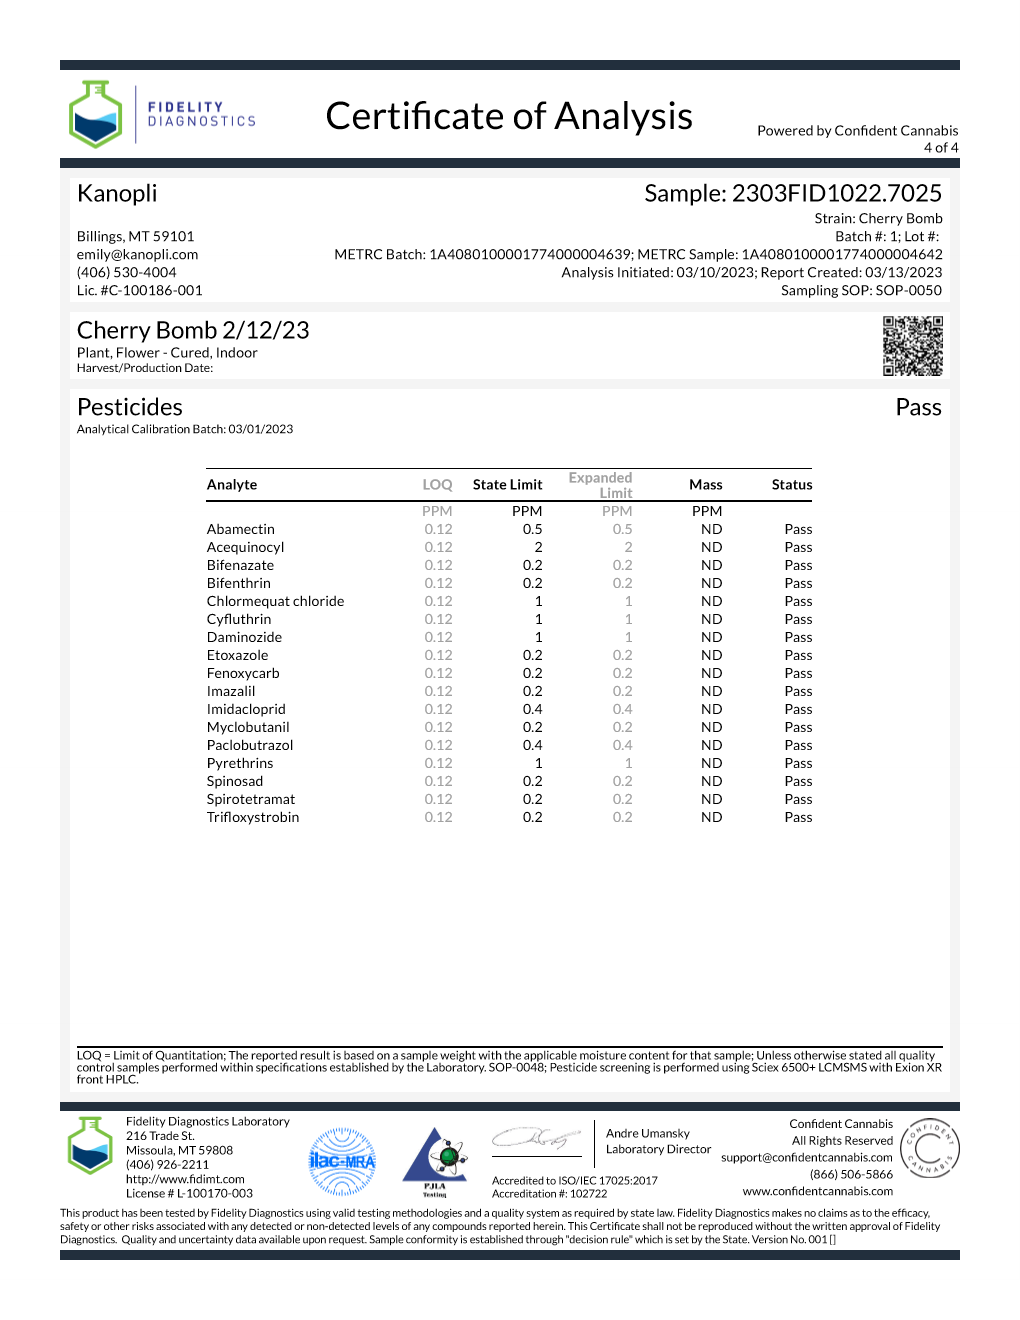 Cherry Bomb - Hybrid shake (28.56% THC) Feb. 2023 (5 grams)